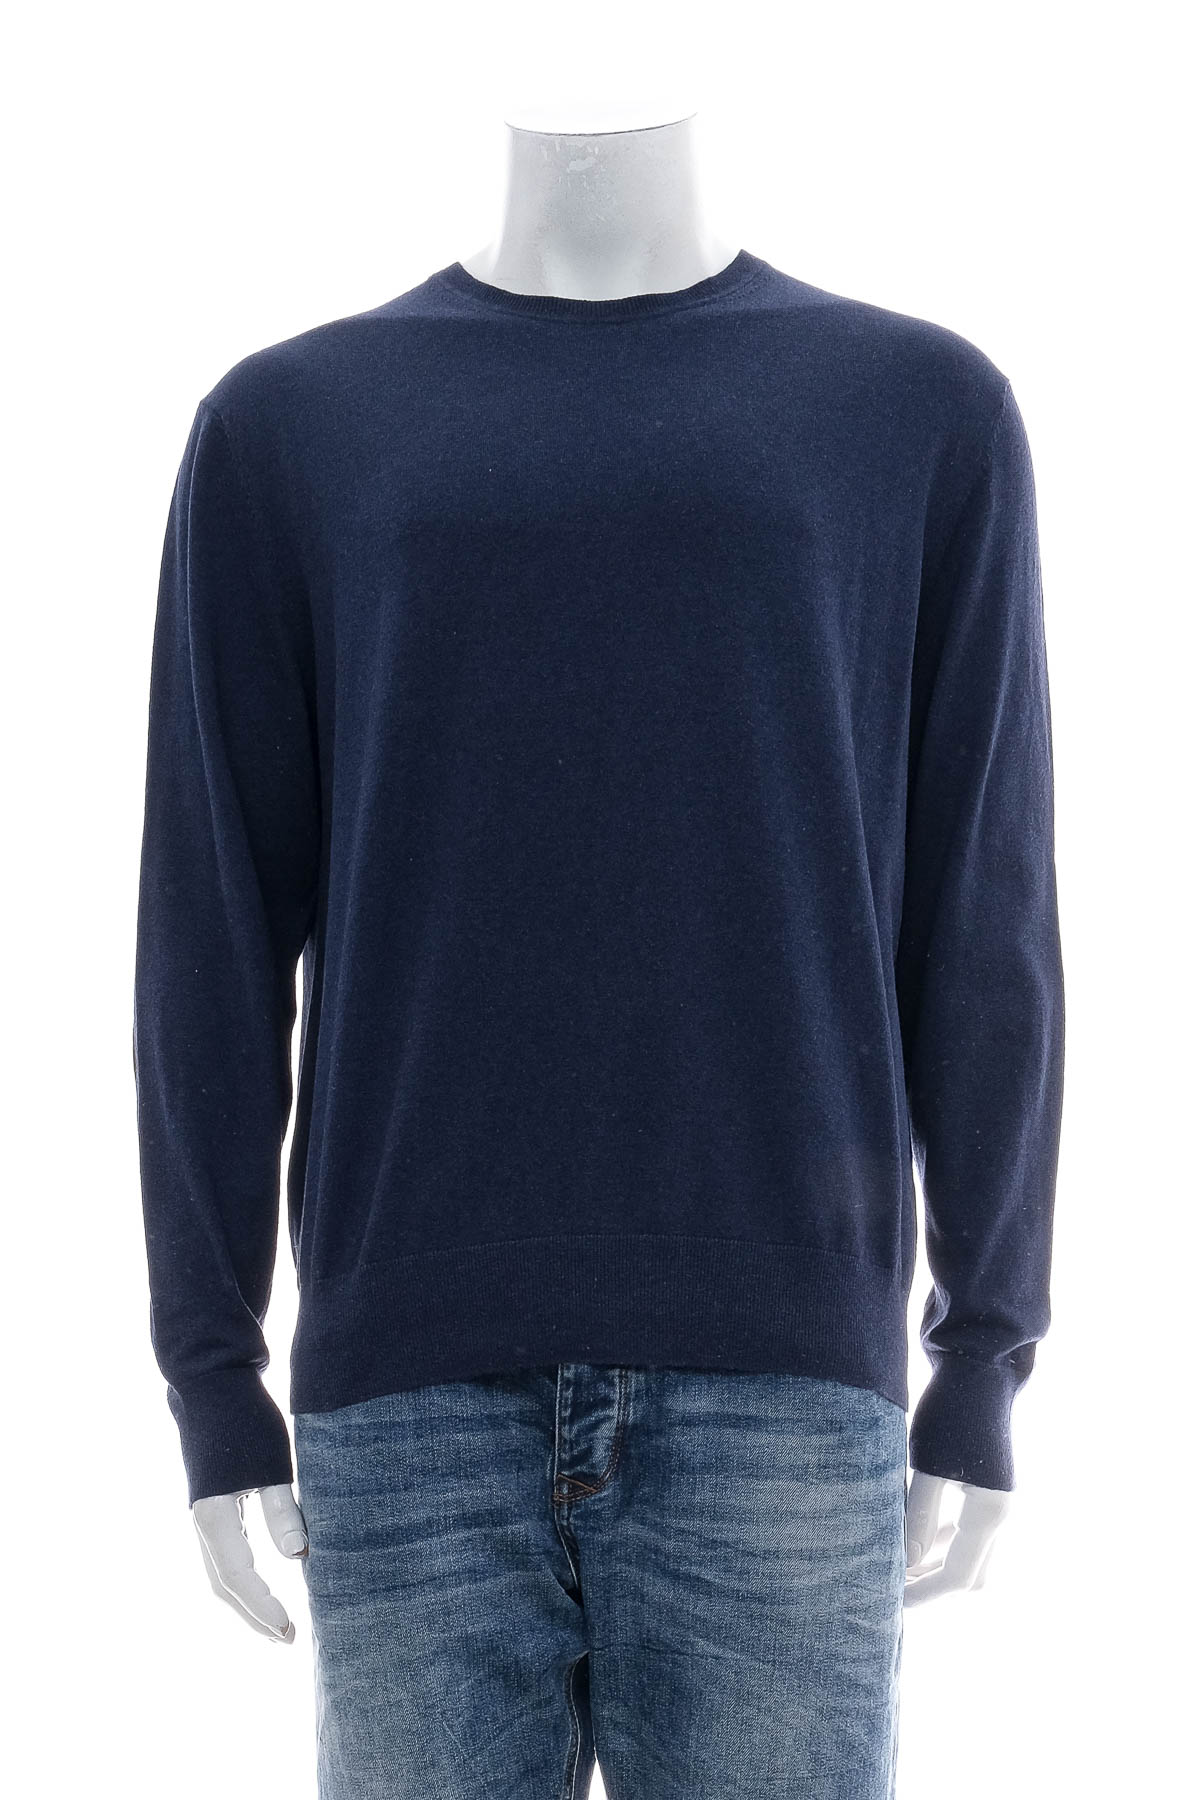 Men's sweater - FRANCO BETTONI - 0